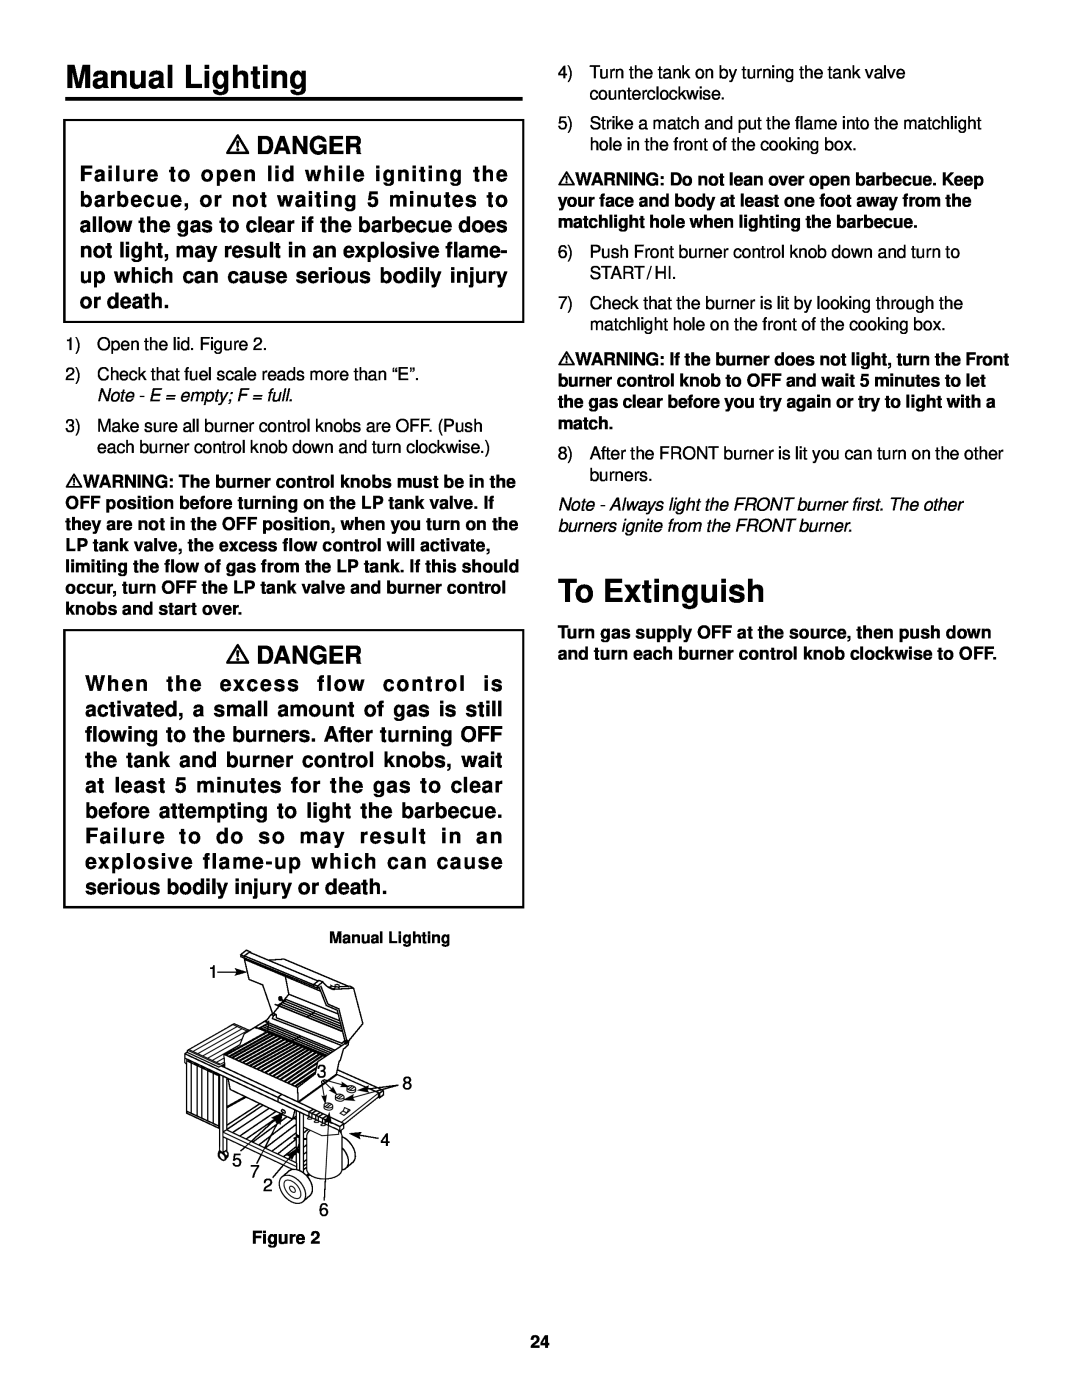 Weber 1000 LX Series owner manual Manual Lighting, To Extinguish, mDANGER 